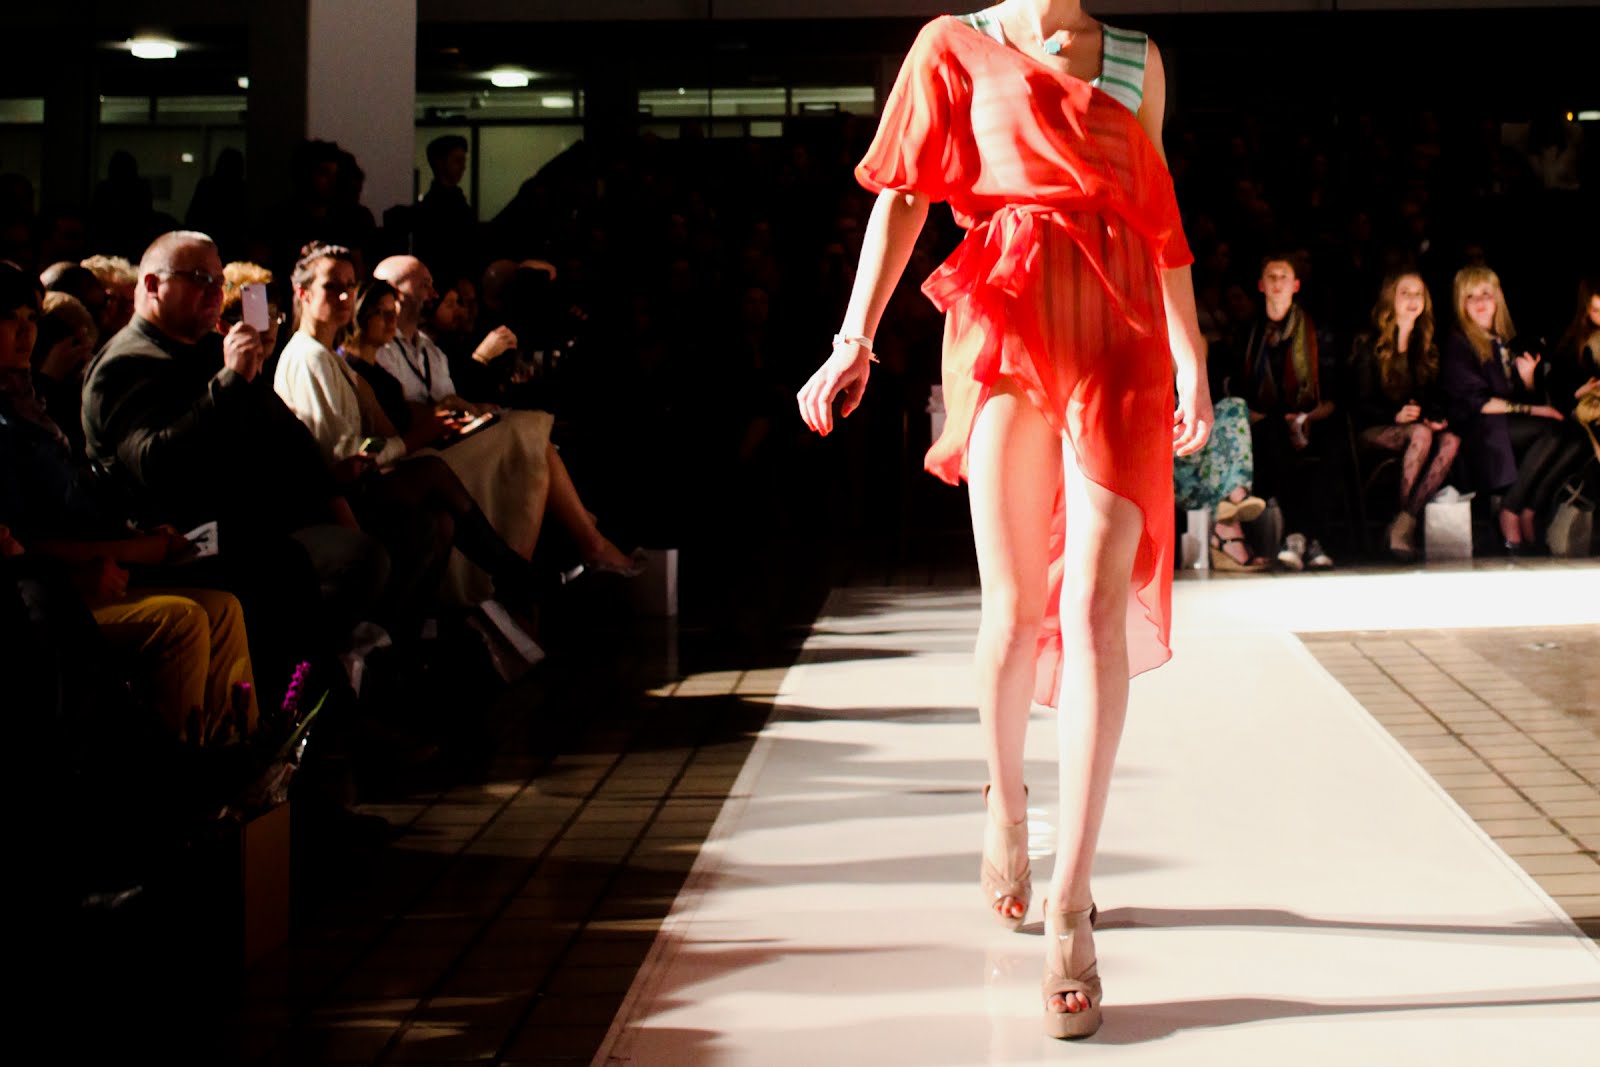 l'etoile magazine blog: MSP Fashion Week in review: 